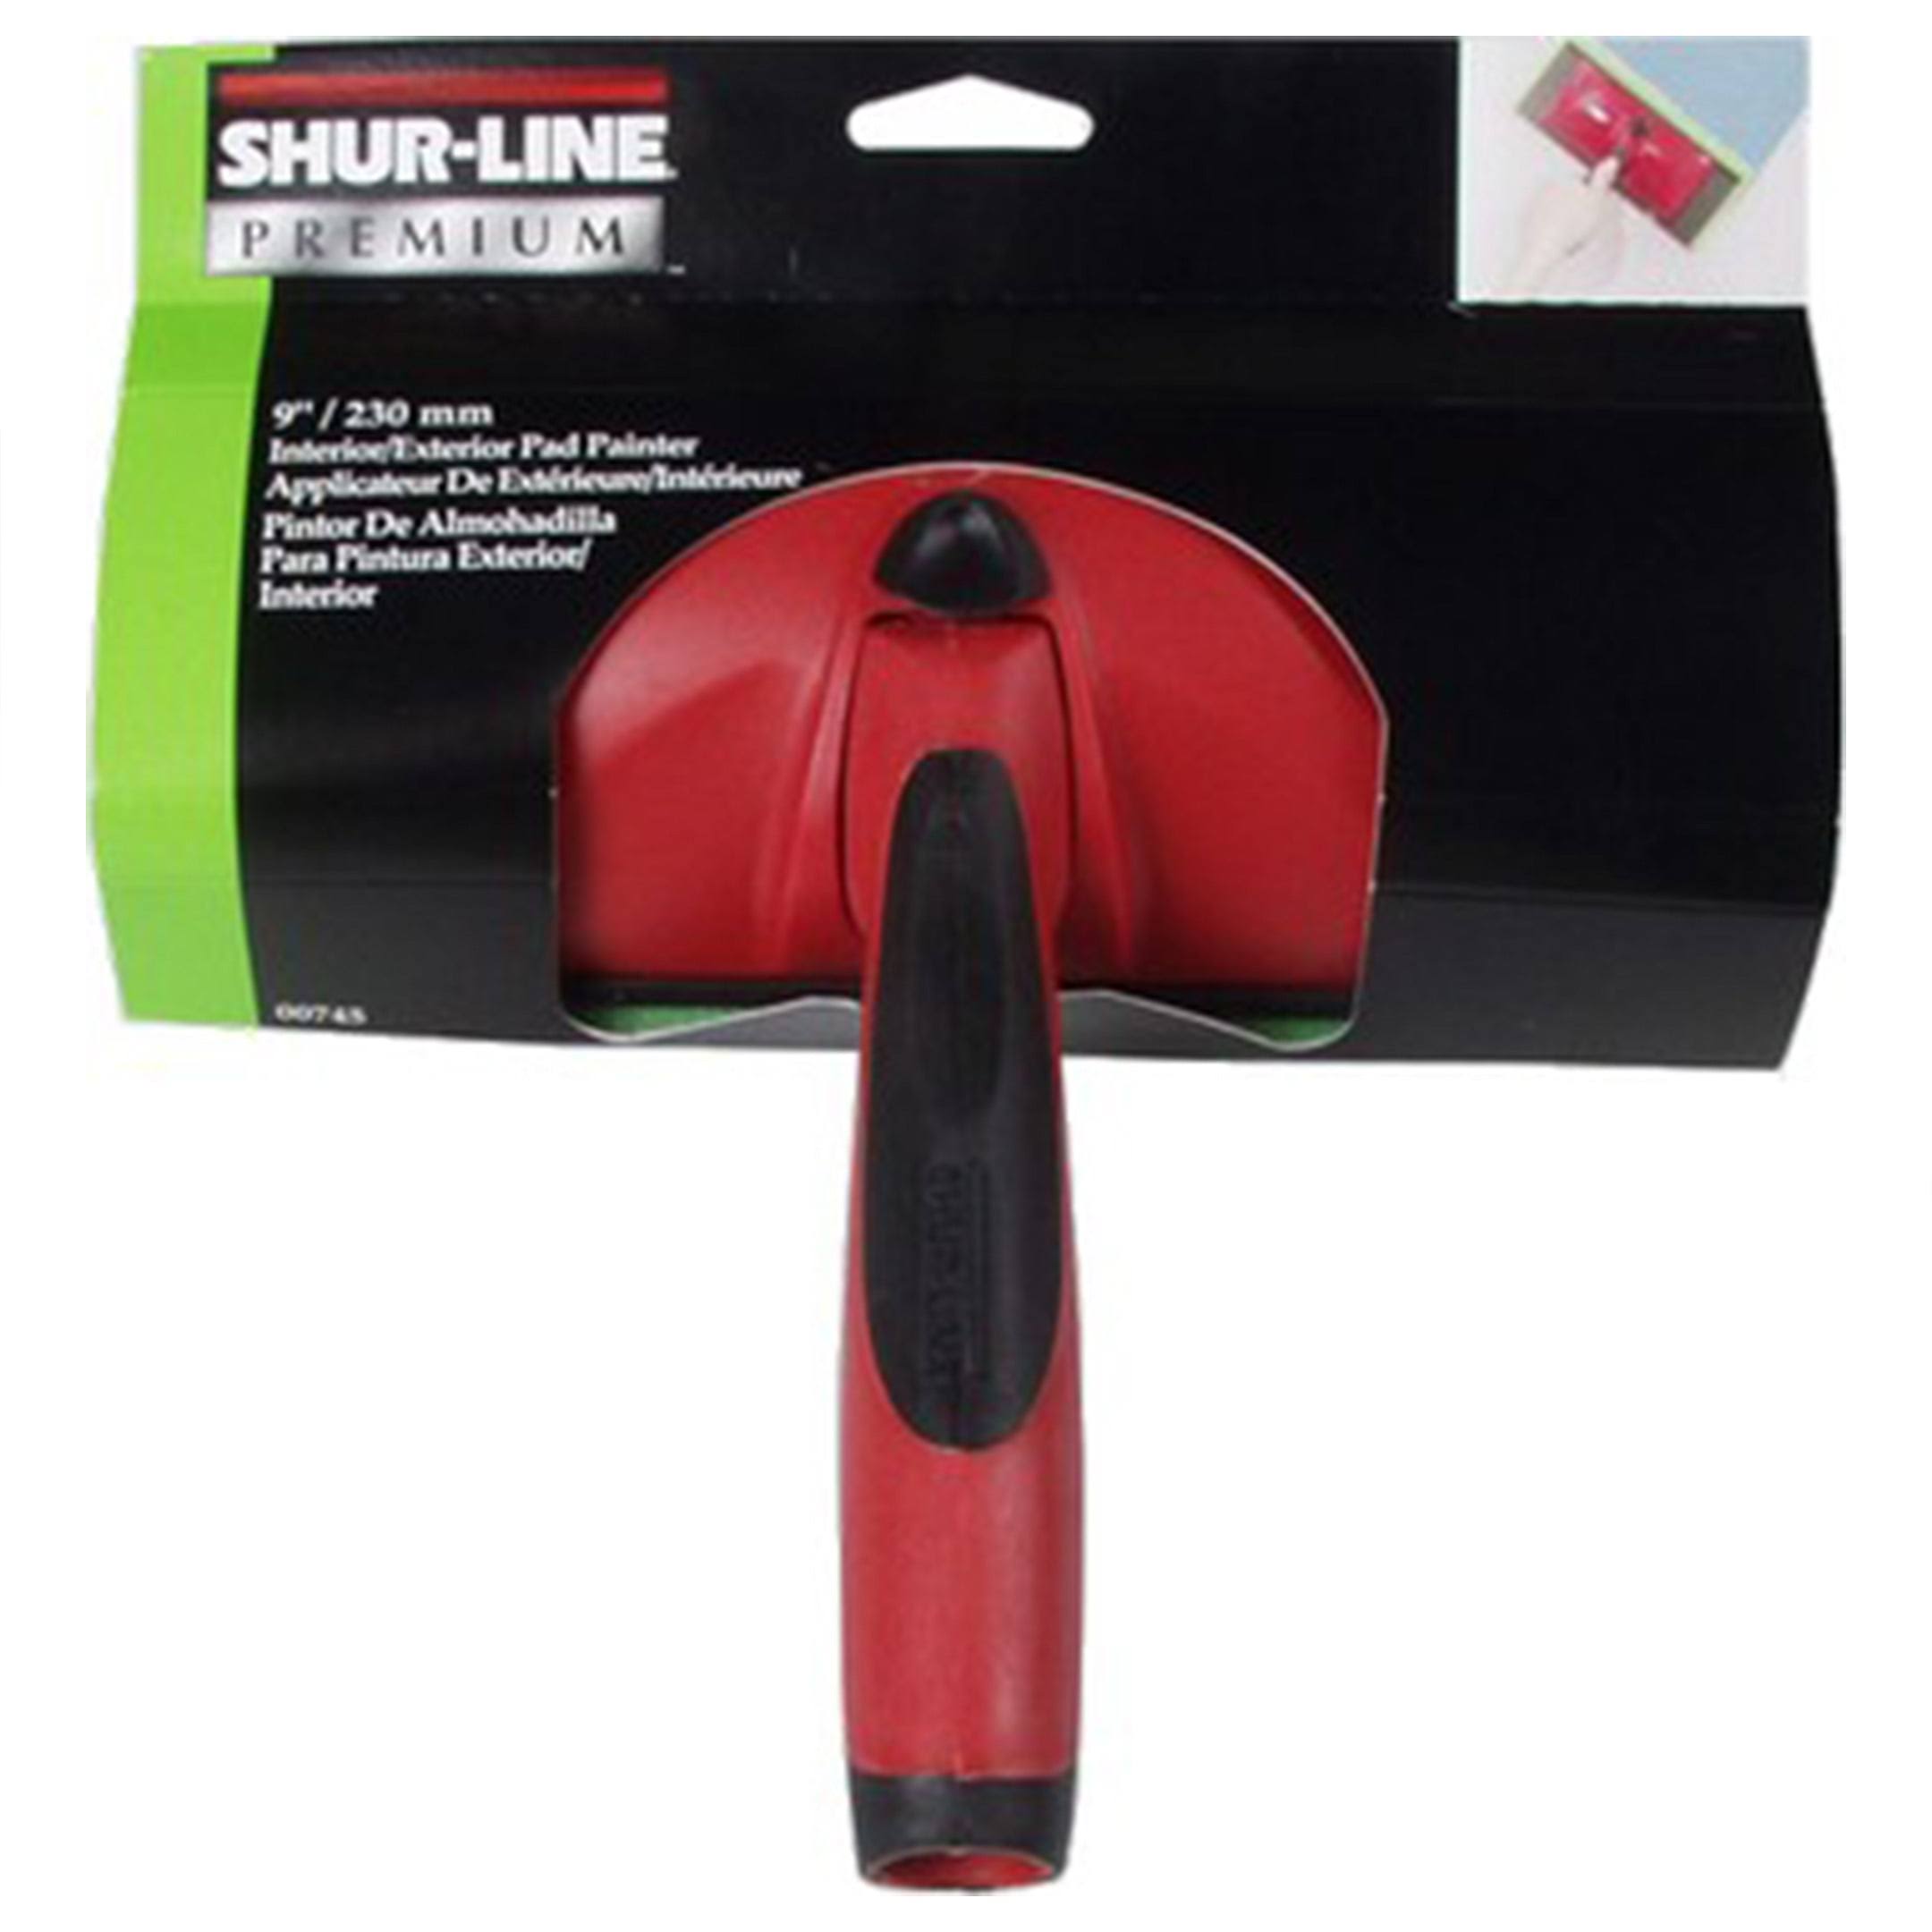 Shur-Line Pad Painter